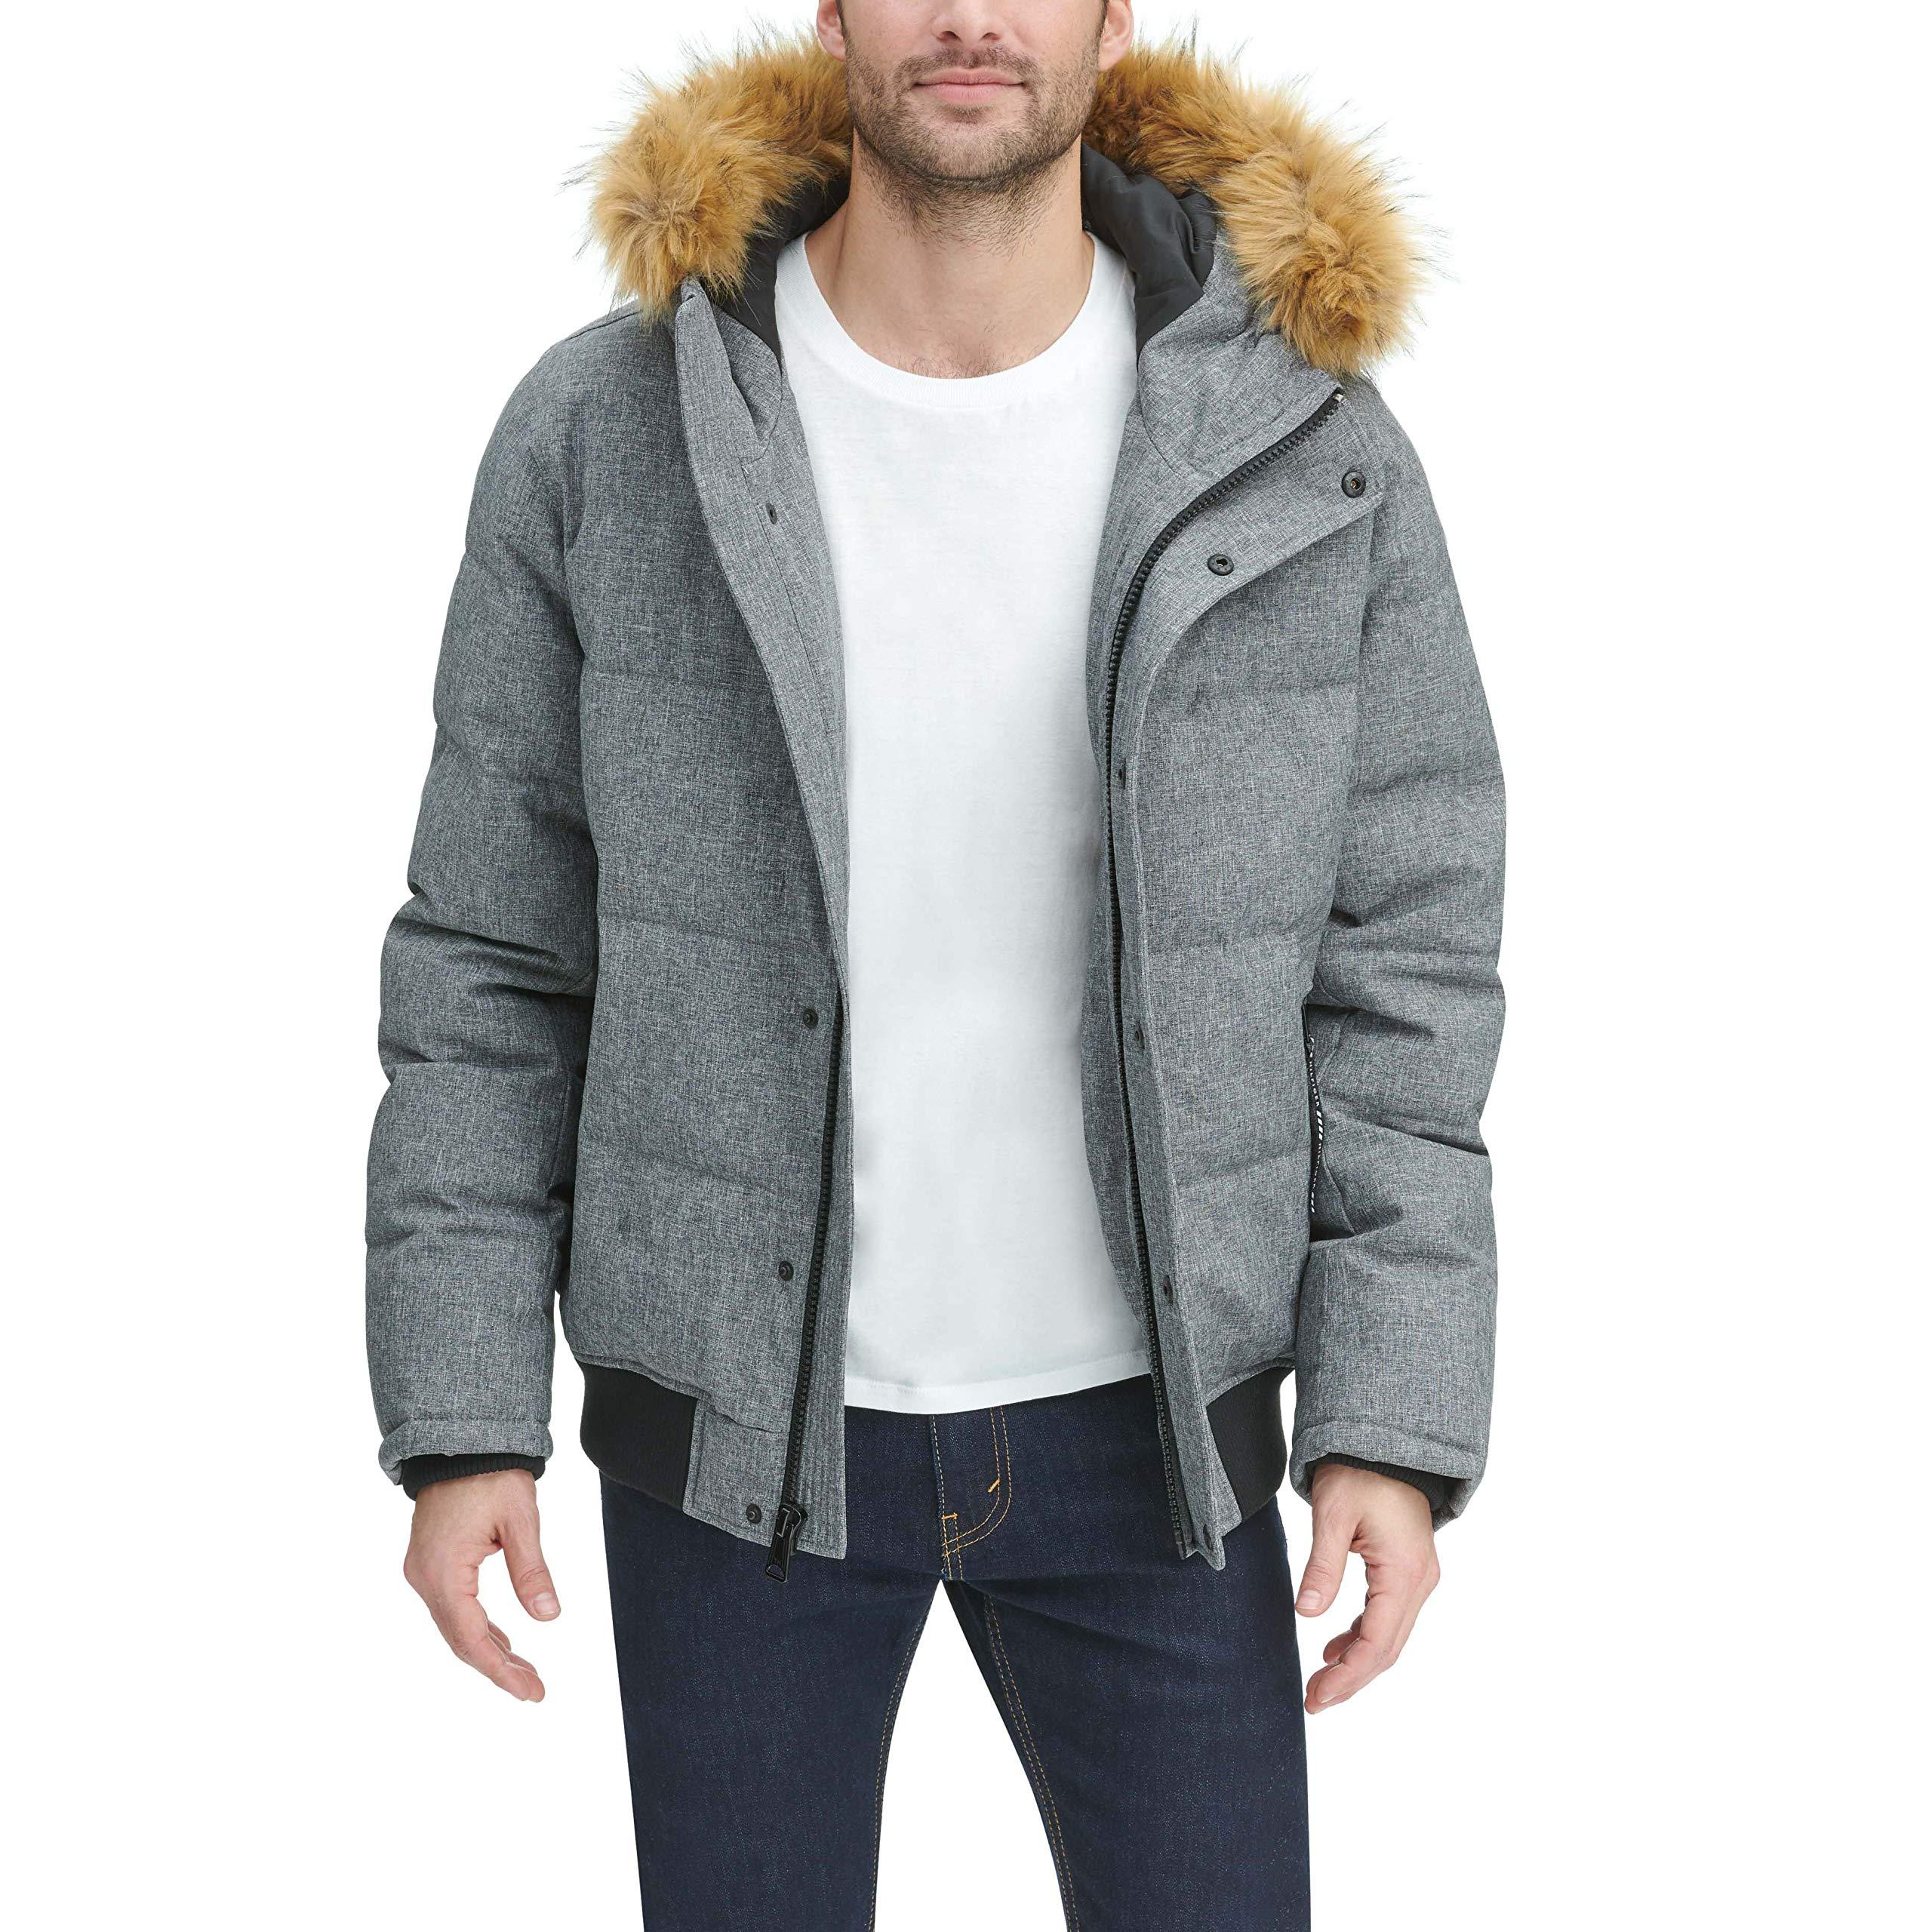 tommy hilfiger arctic hooded bomber jacket